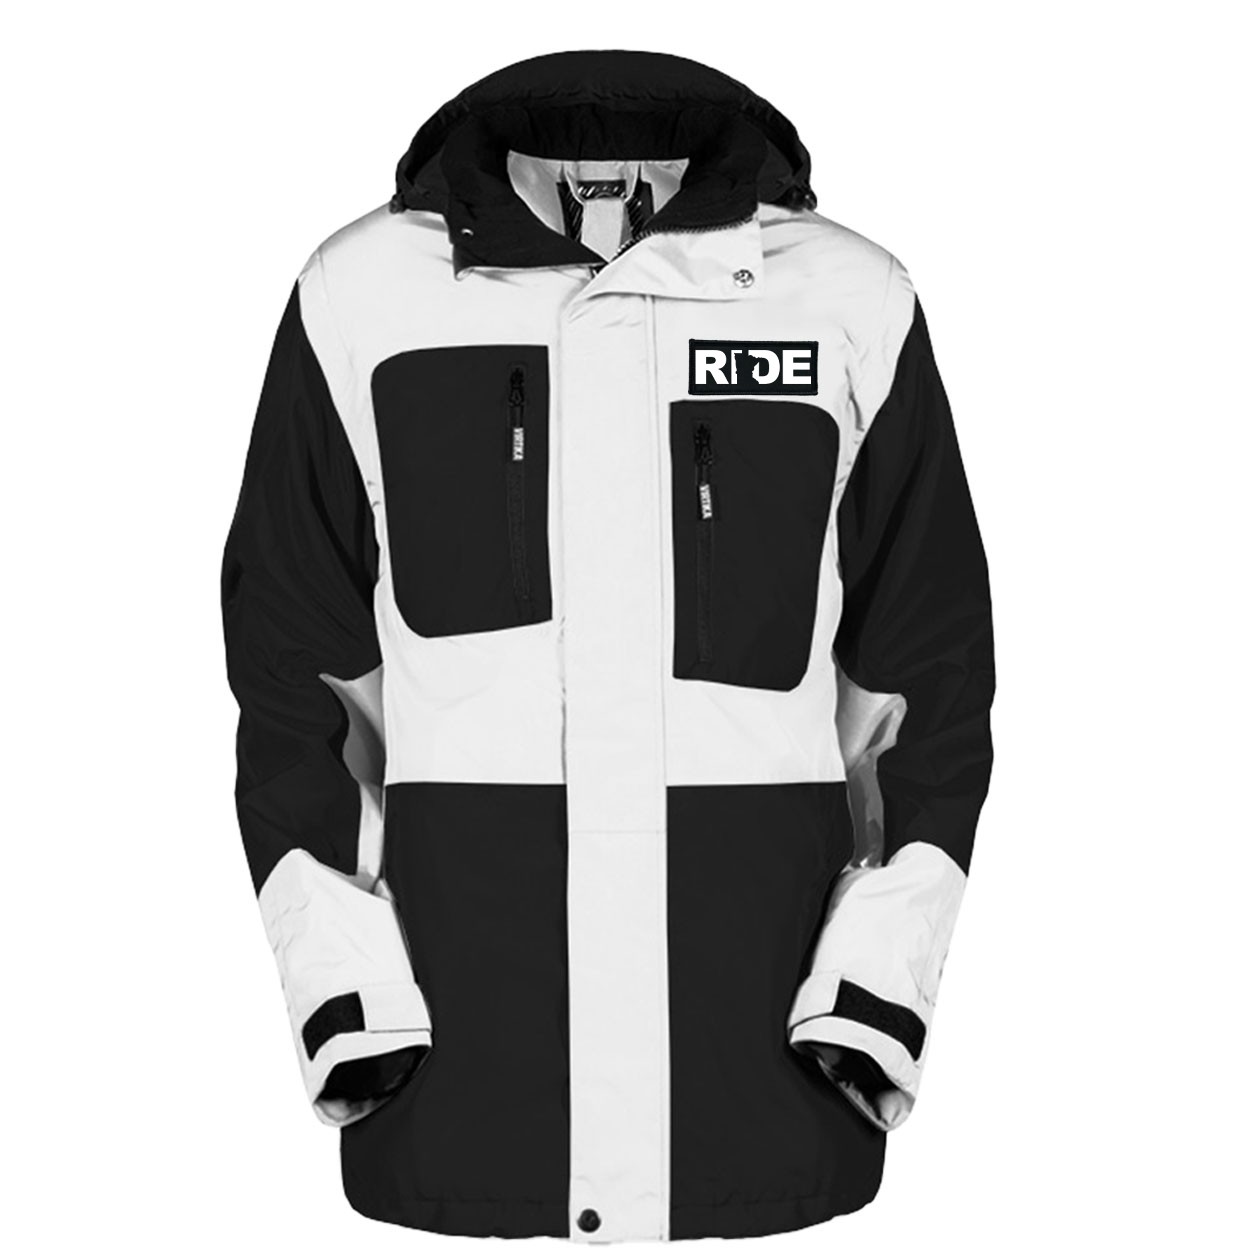 Ride Minnesota Classic Woven Patch Pro Snowboard Jacket (Black/White)